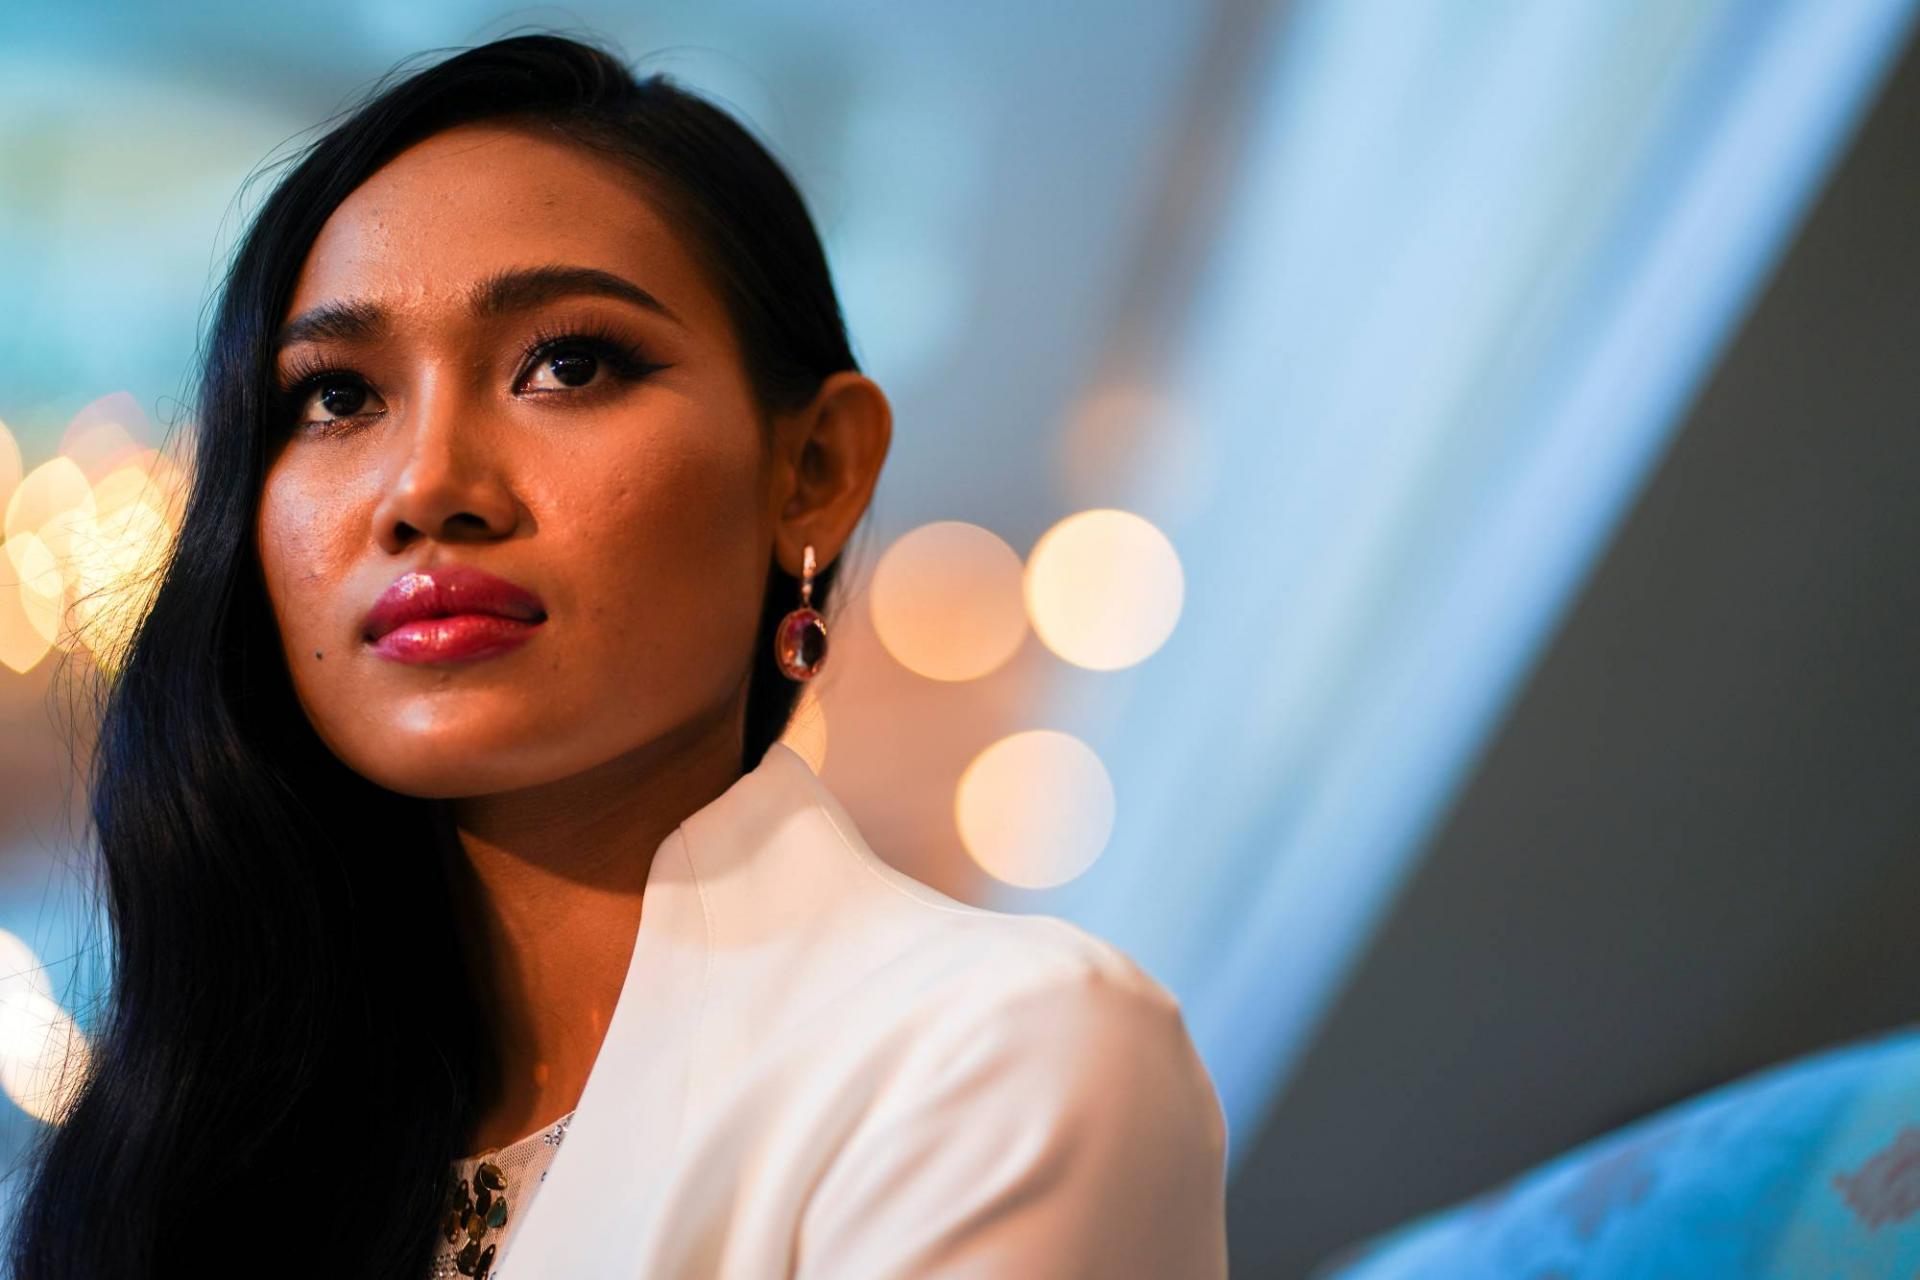 Who Is Han Lay – Myanmar Beauty Queen Calling For Help